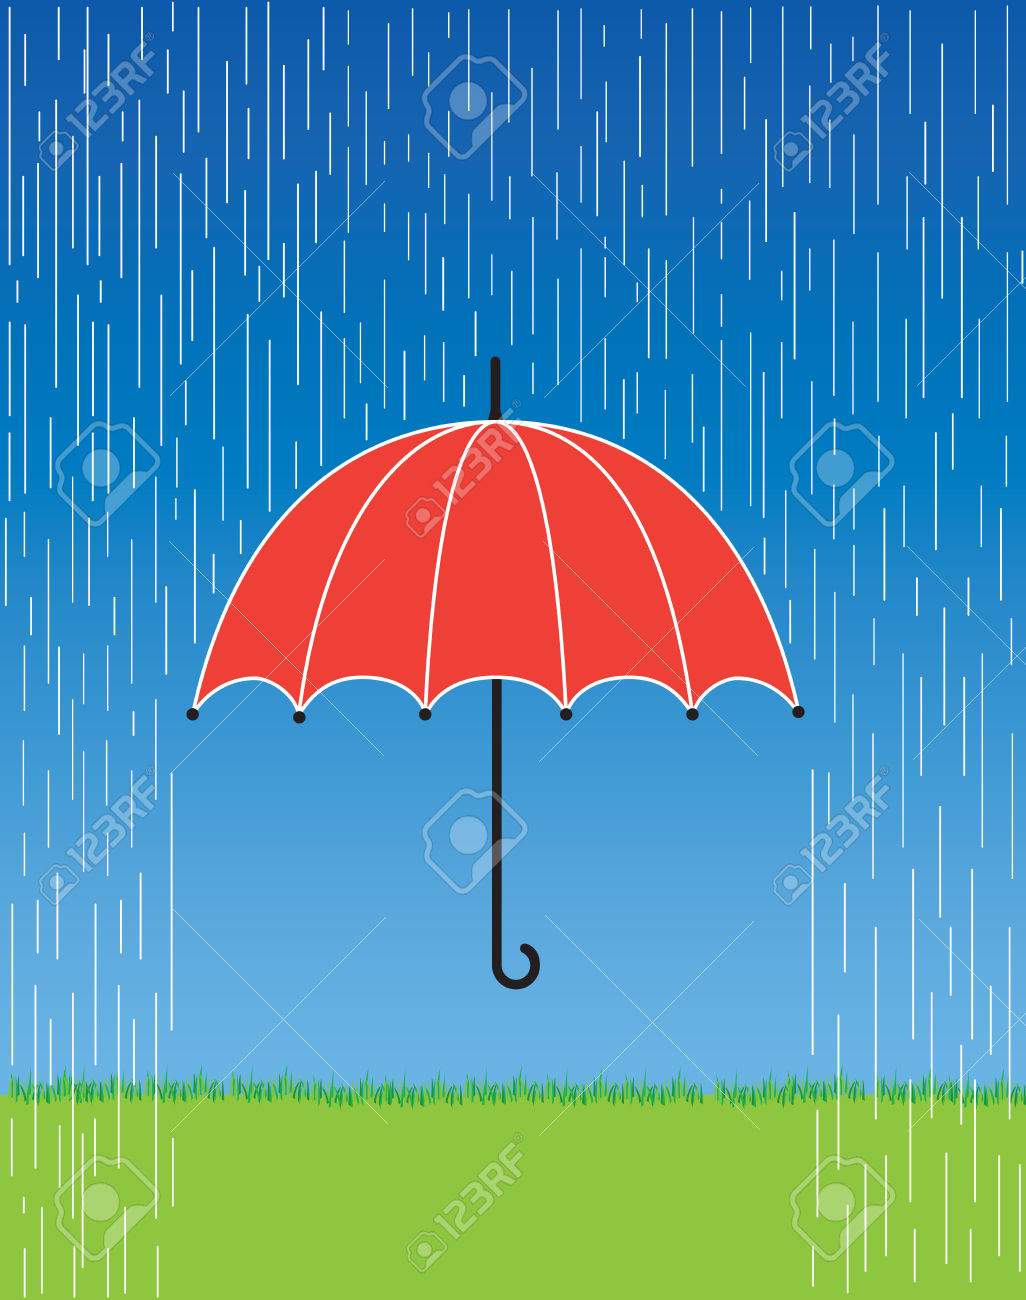 A Illustration Of A Bright Red Umbrella In A Fierce Rain Storm.